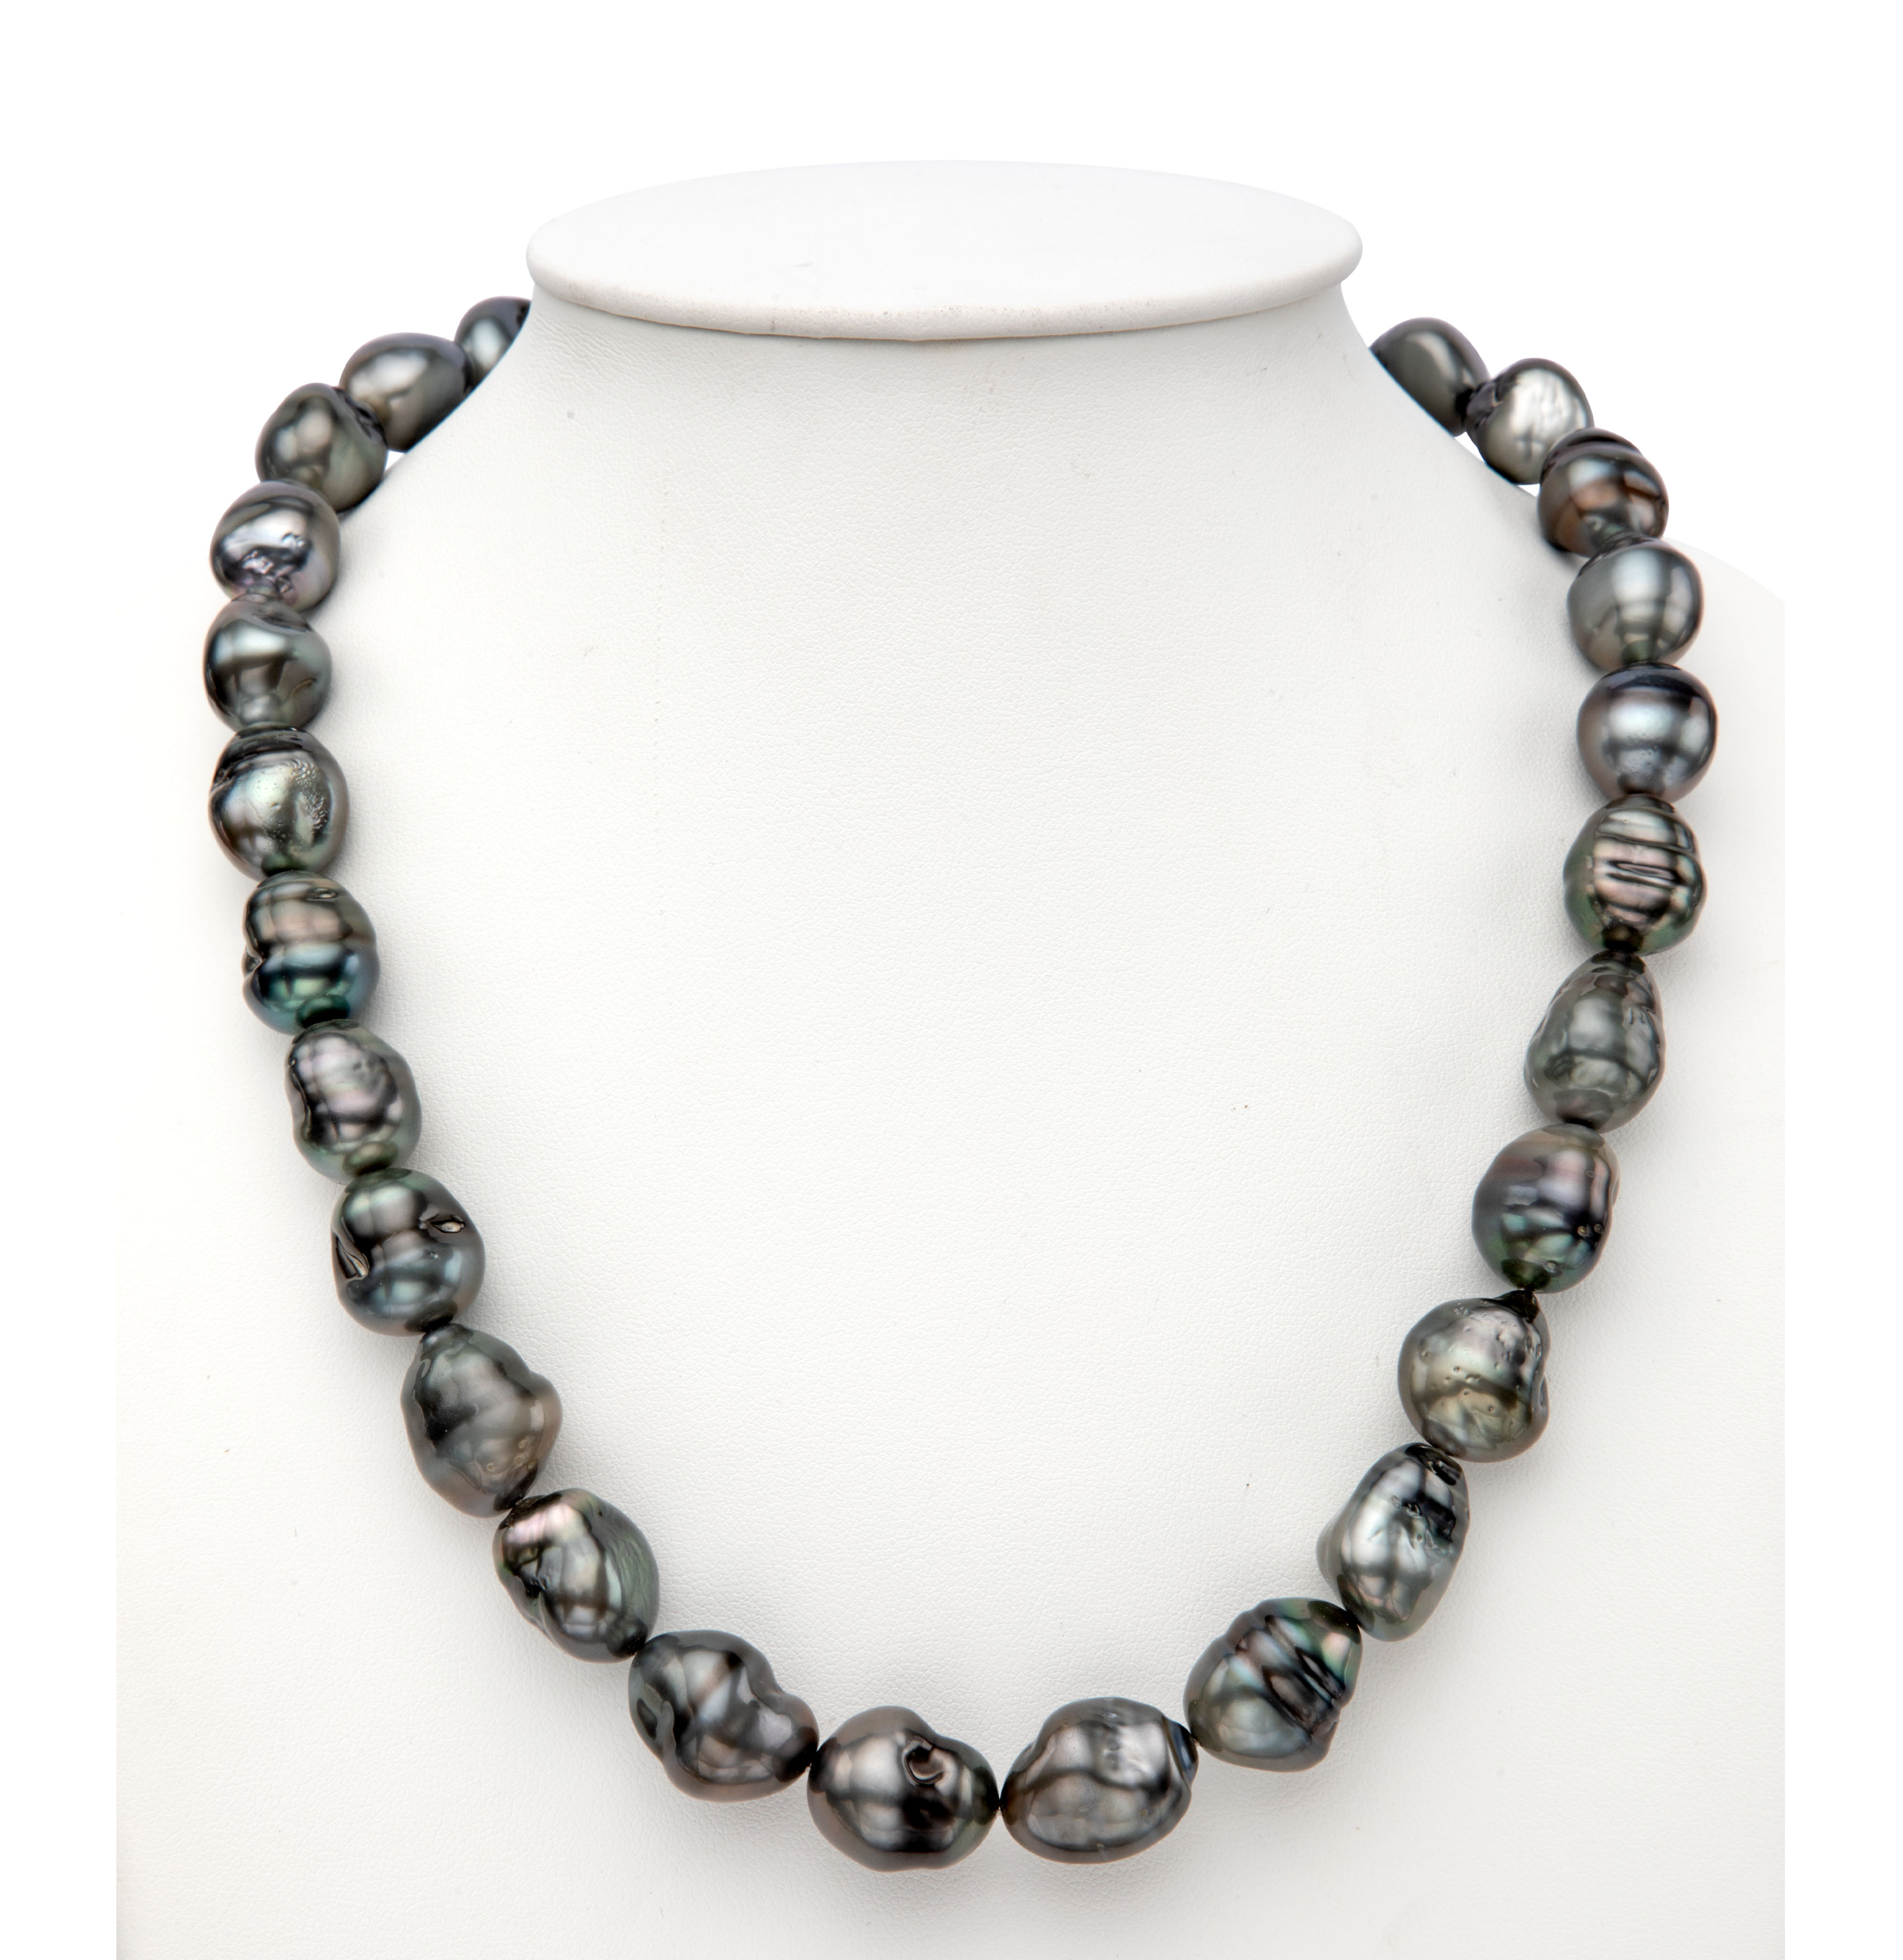 Buy Saltwater Necklace | Darpan Mangatrai Online | Mangatrai Pearls ...